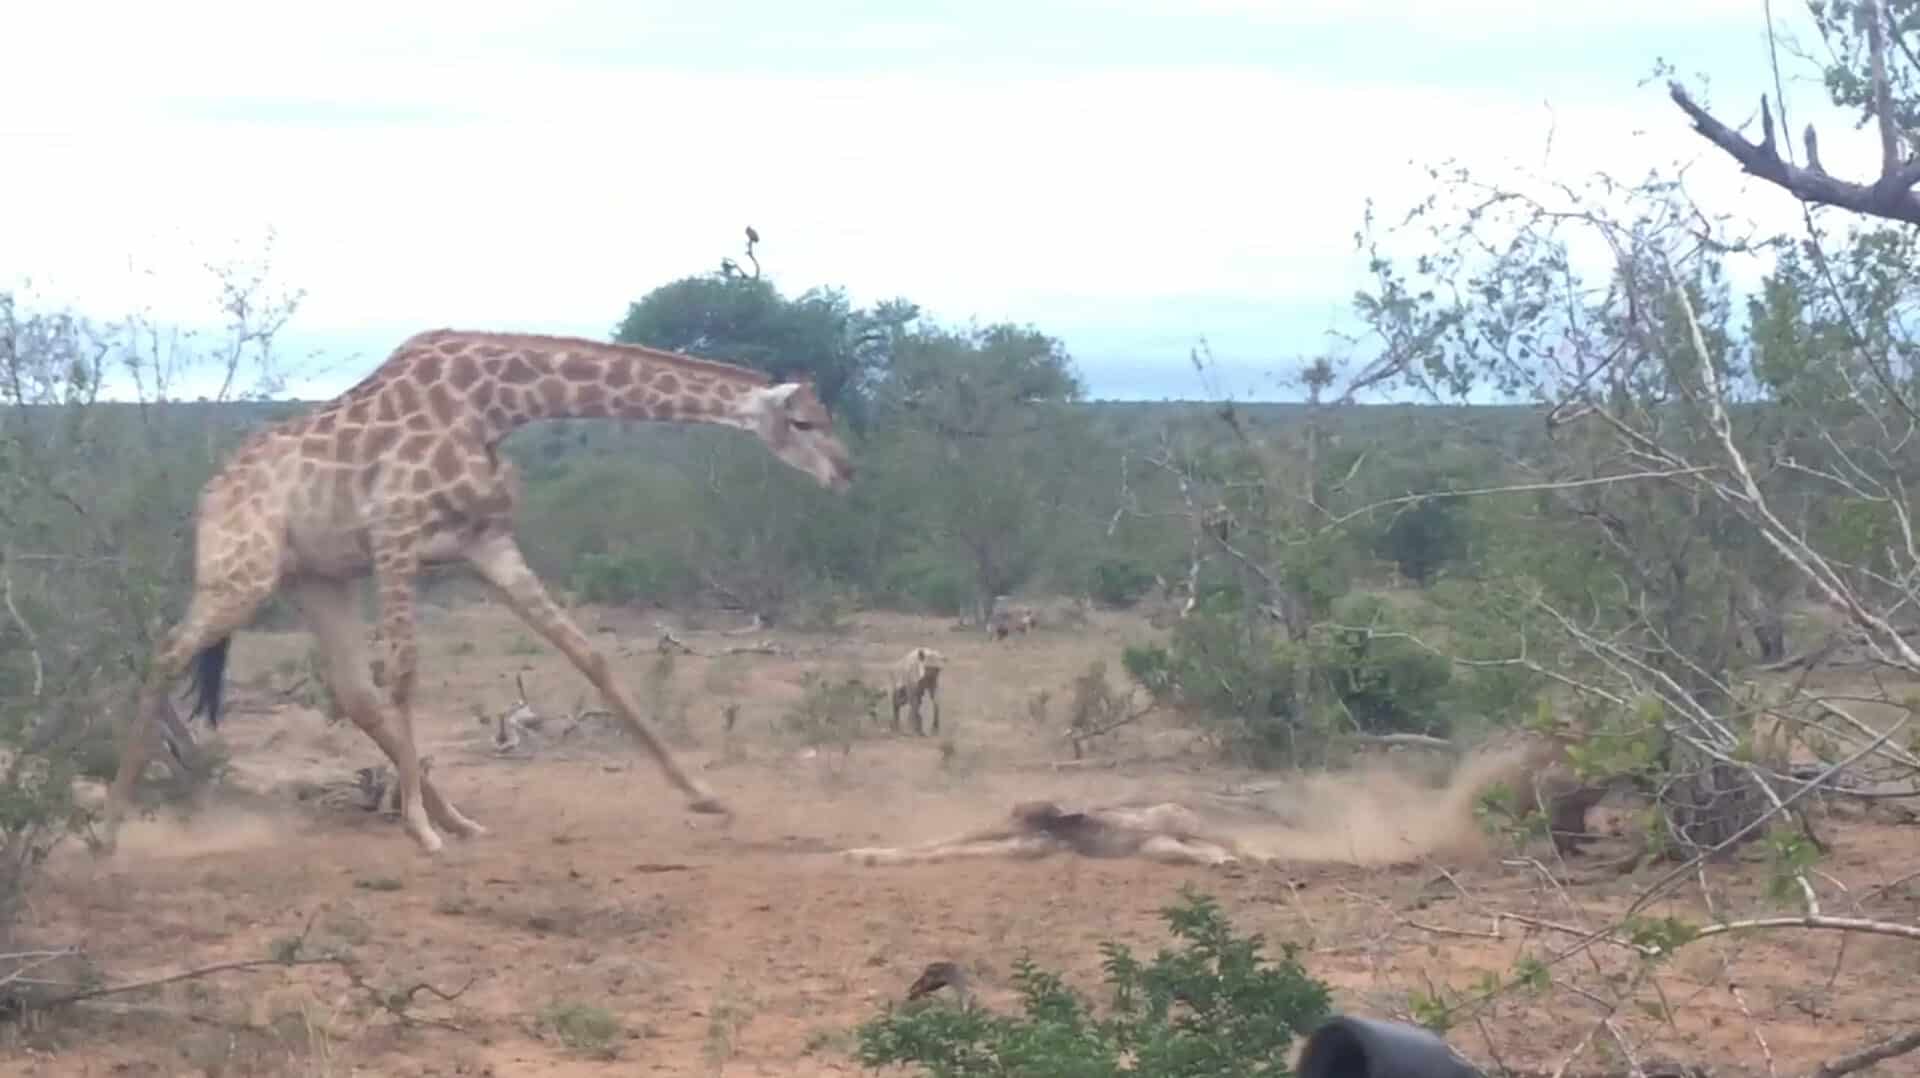 Giraffe tries to save her calf